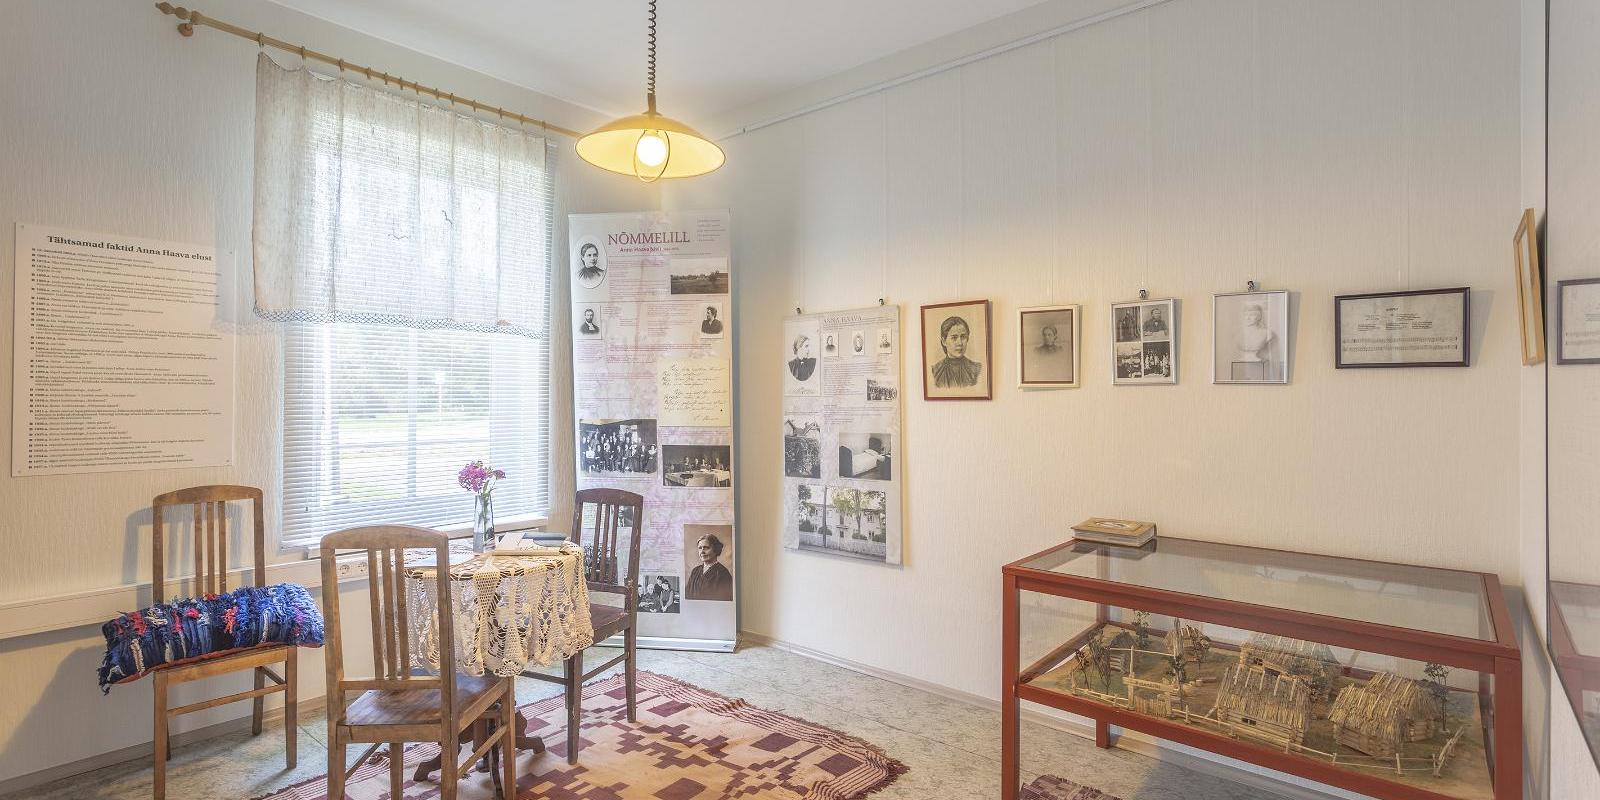 Kodavere Heritage Centre, memorial room to Anna Haava